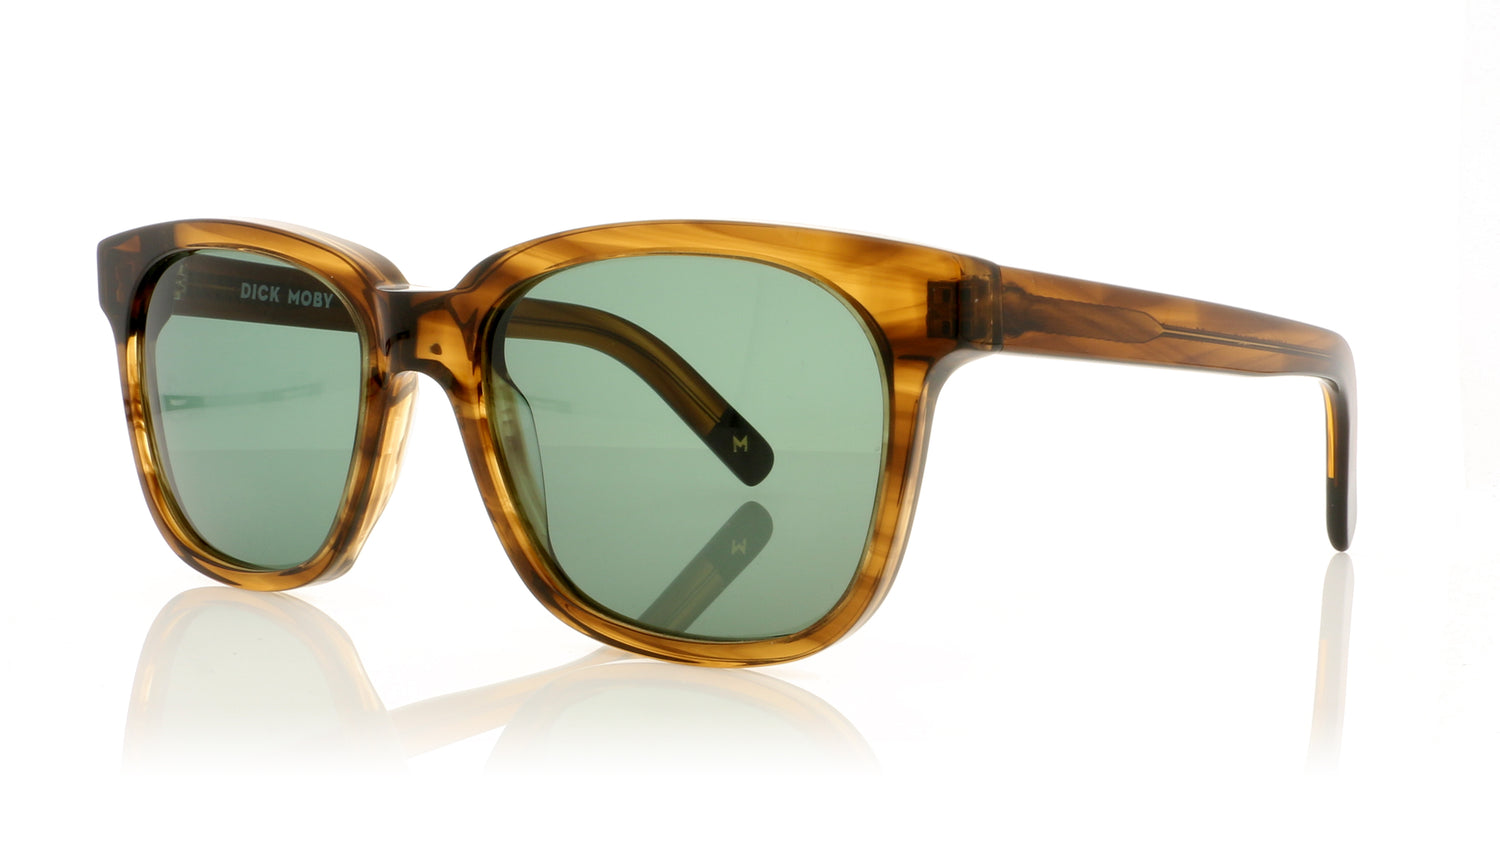 Dick Moby SFO 009-3 Yellow leaves Sunglasses - Angle